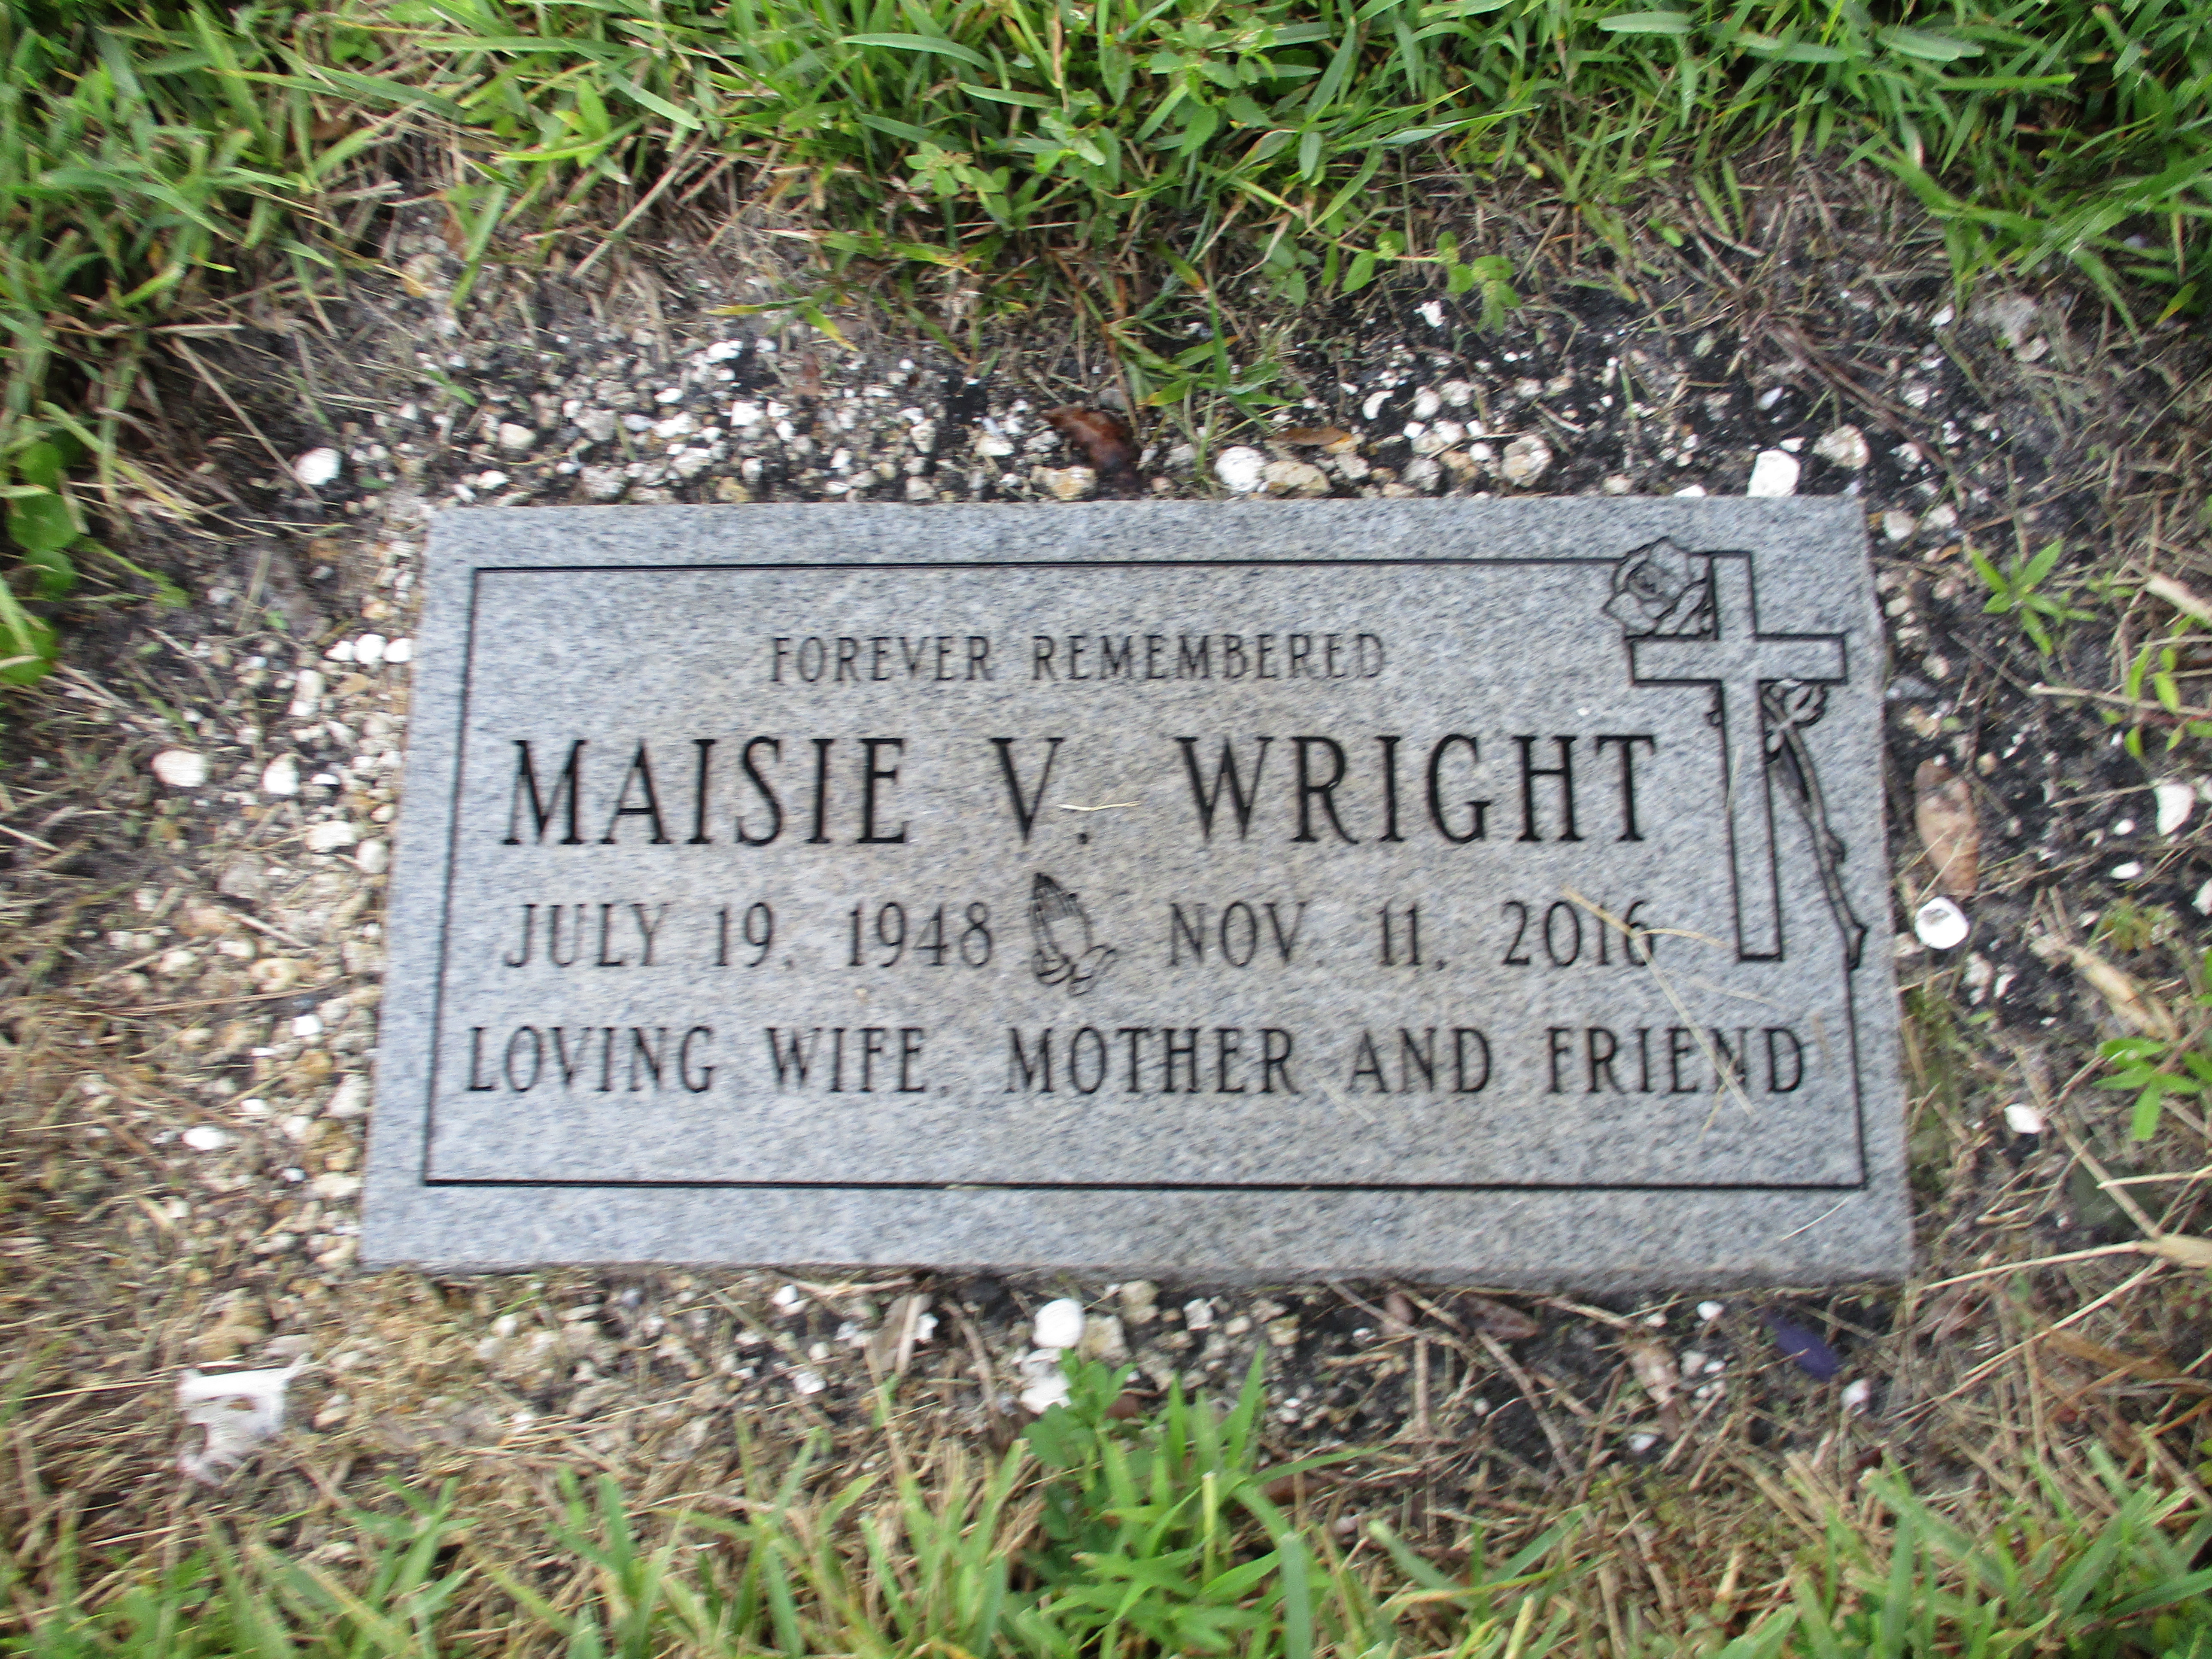 Maisie V Wright